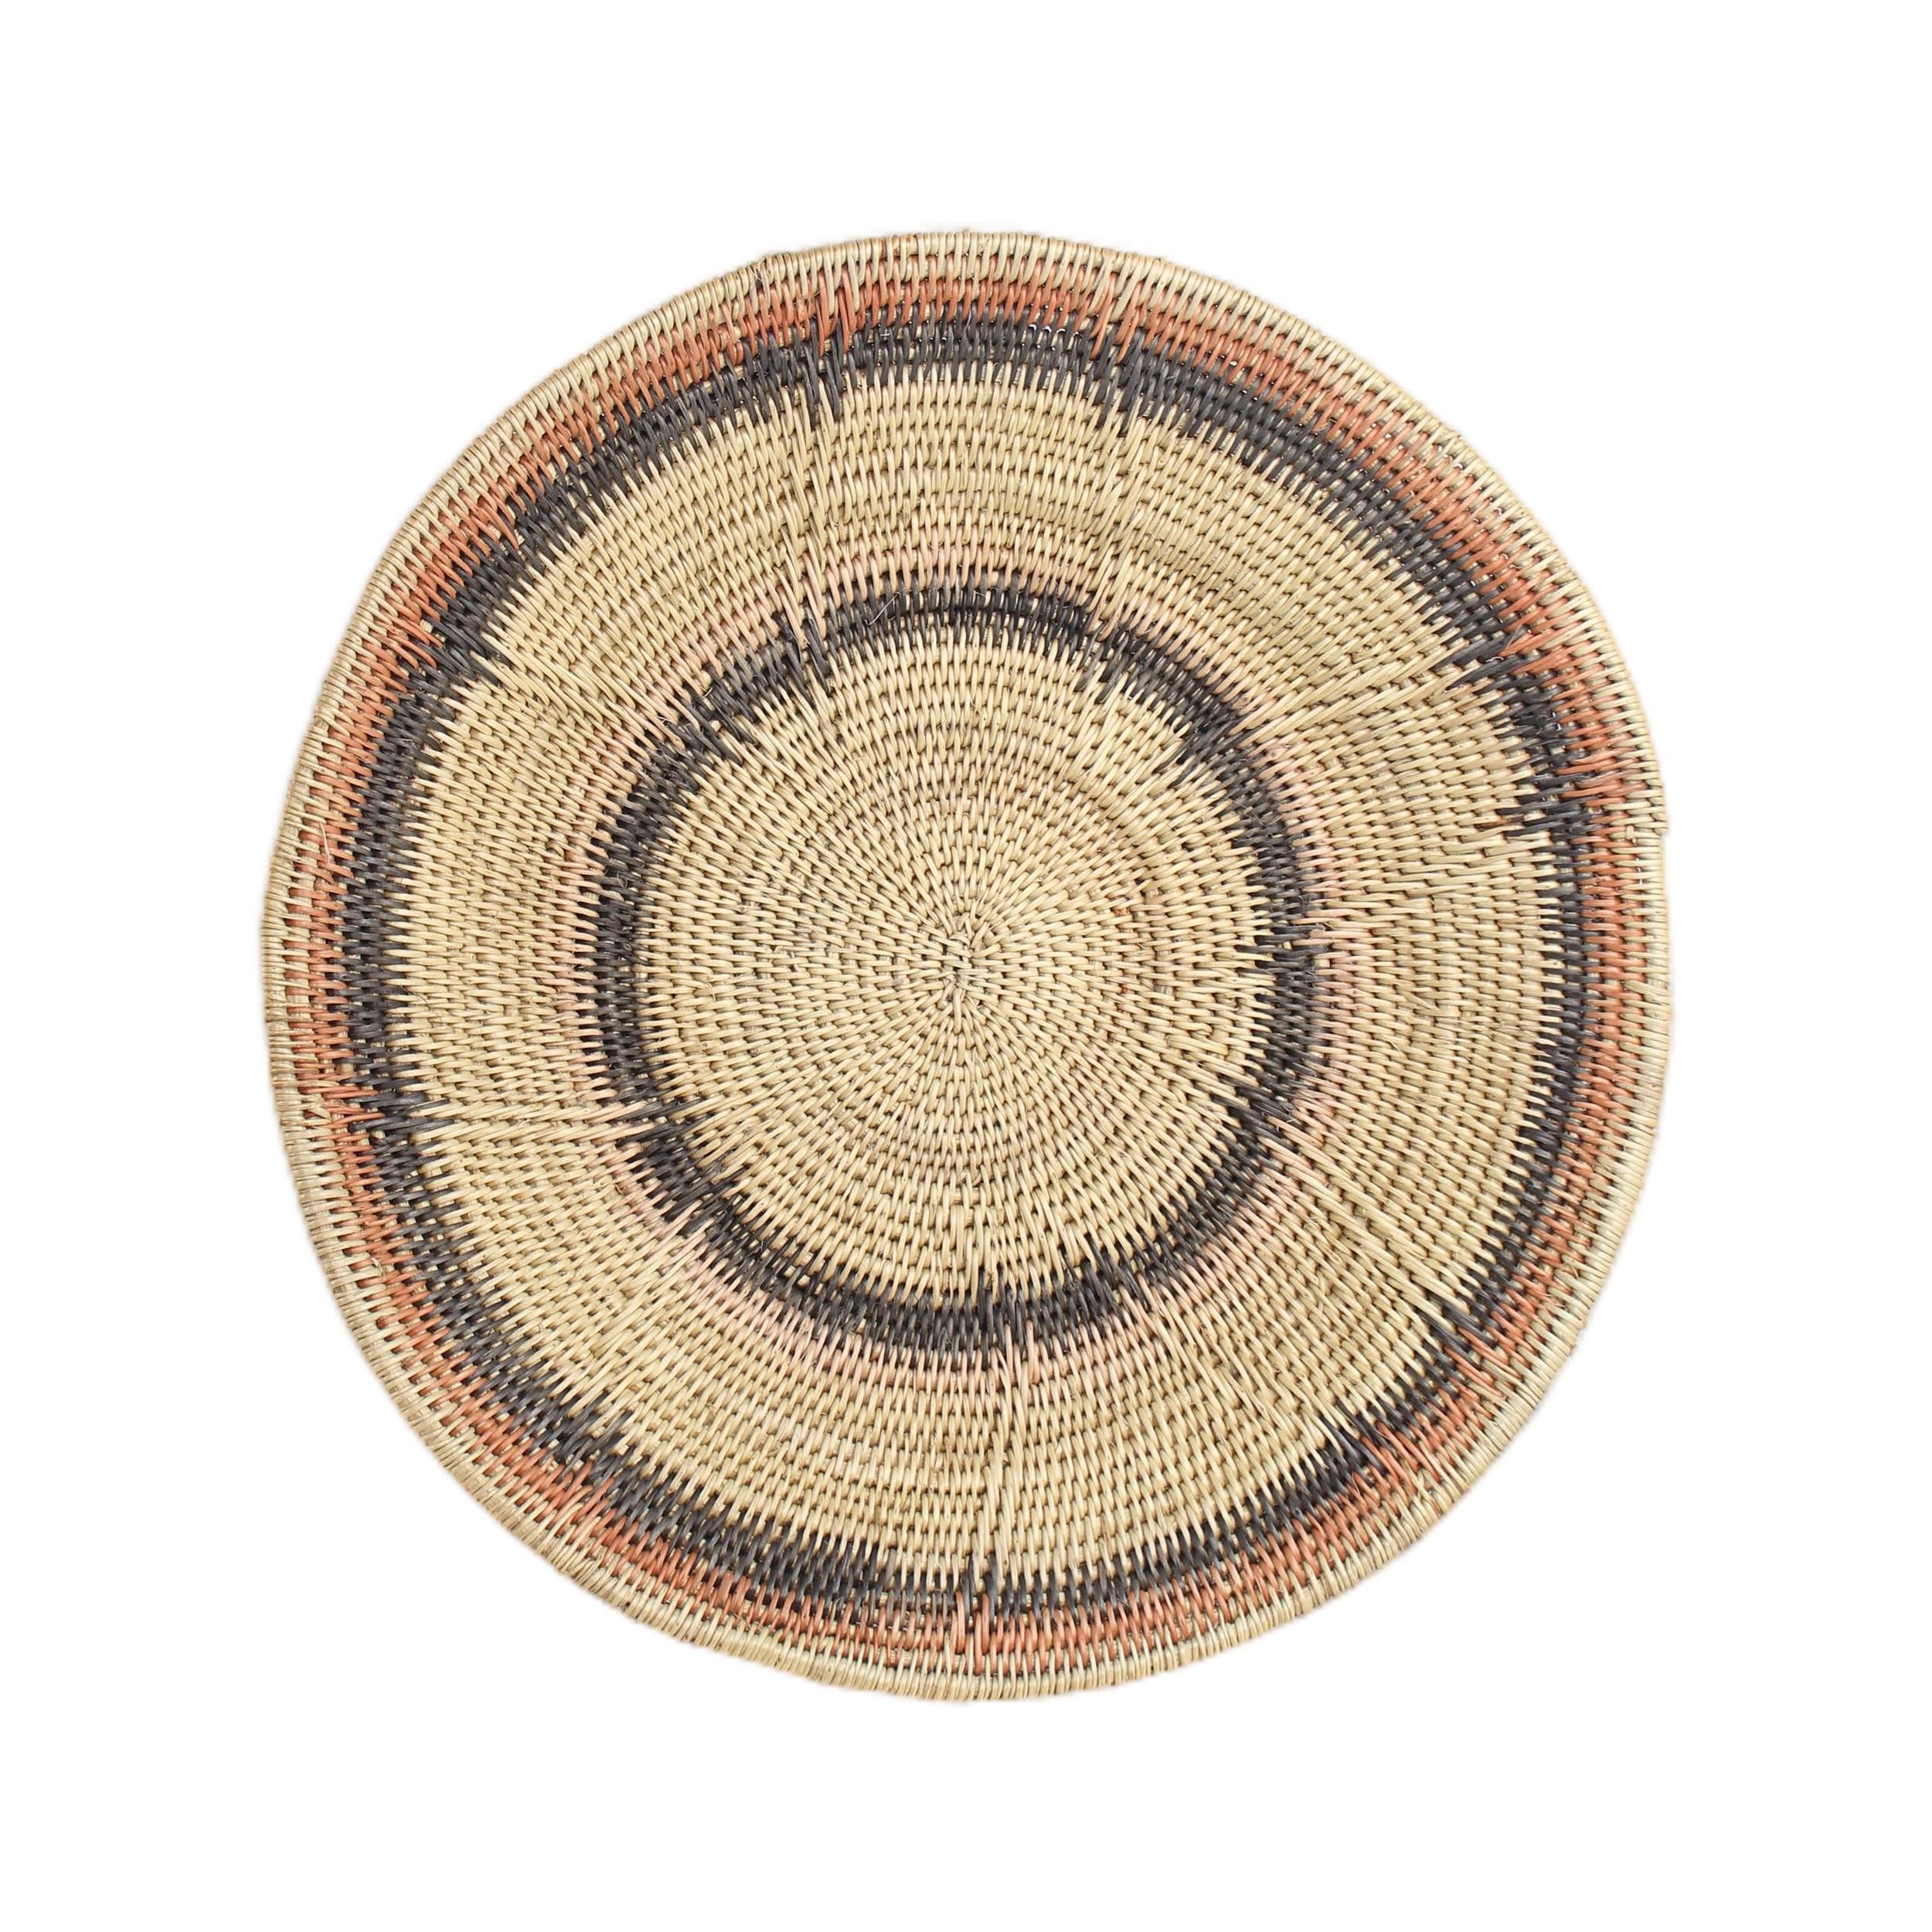 Tonga Tribe Baskets ~18.9" Tall